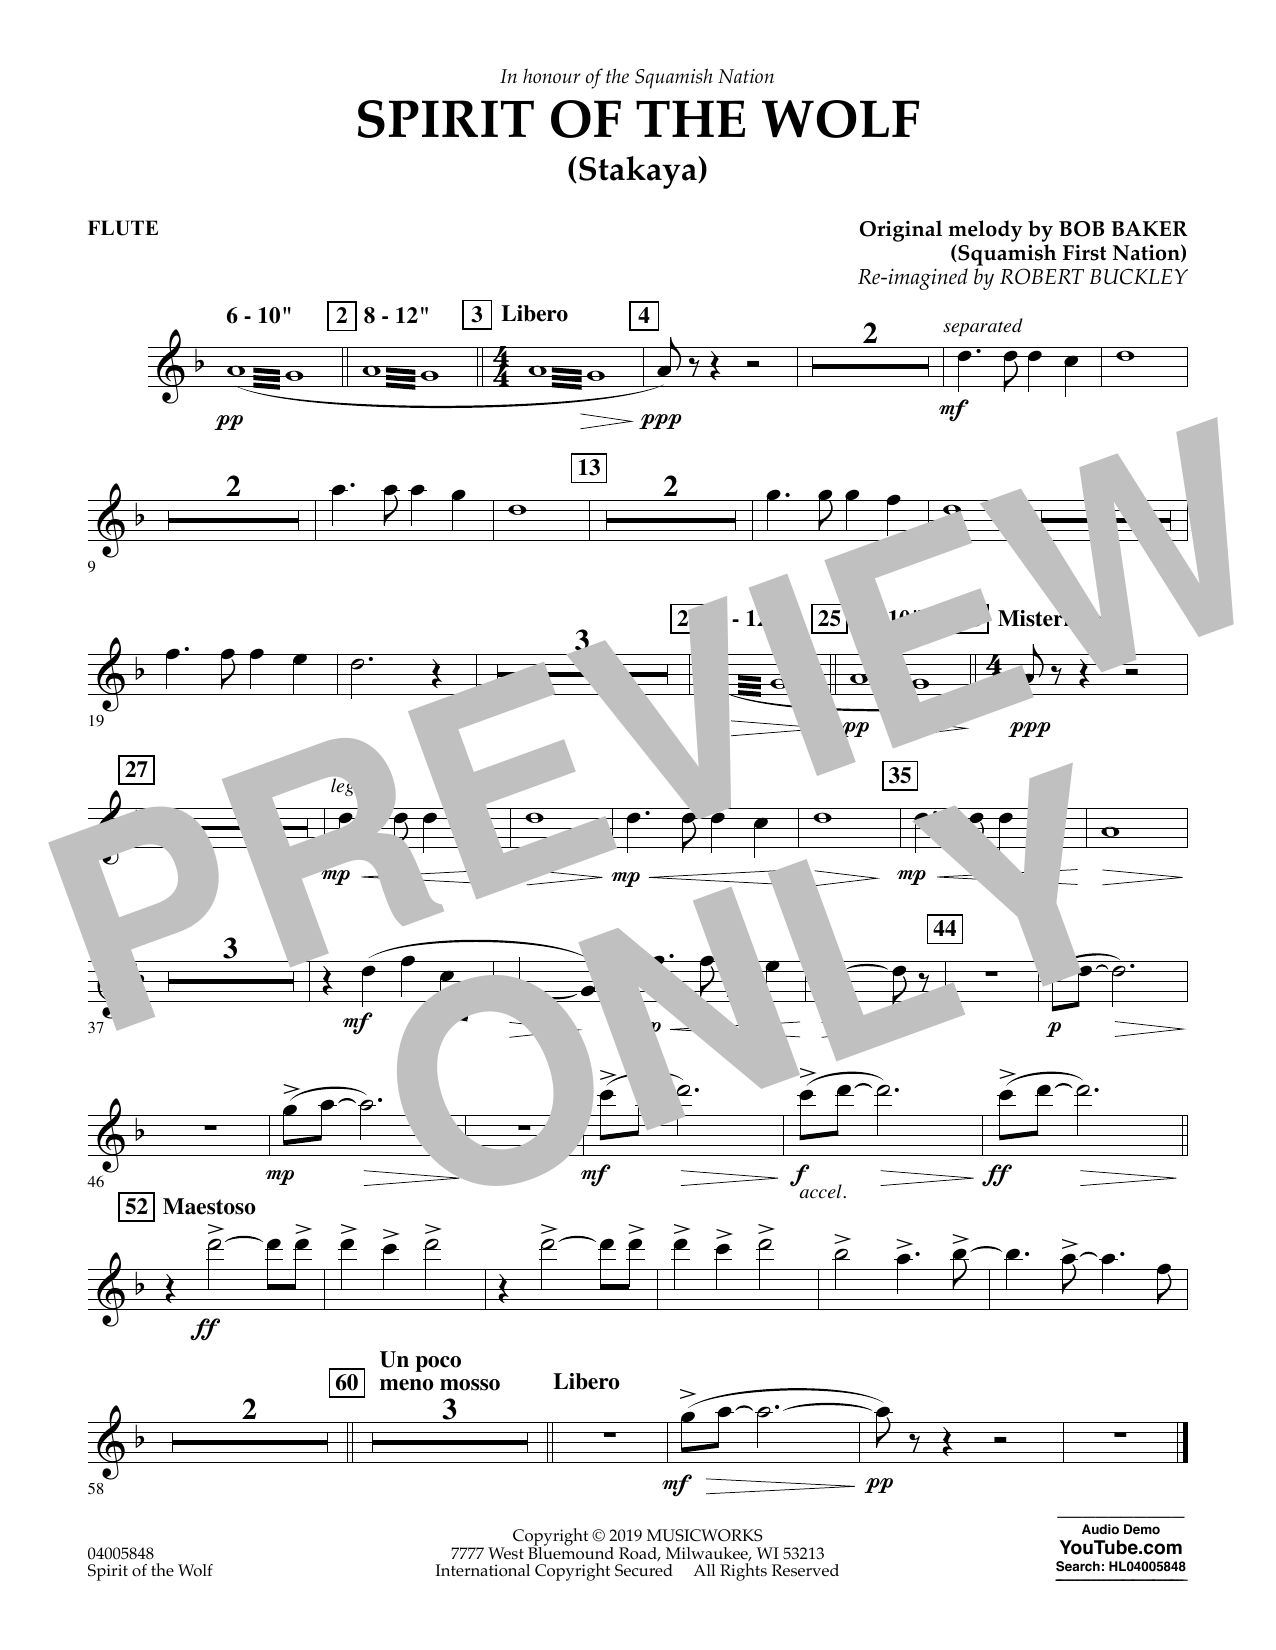 Download Robert Buckley Spirit of the Wolf (Stakaya) - Flute Sheet Music